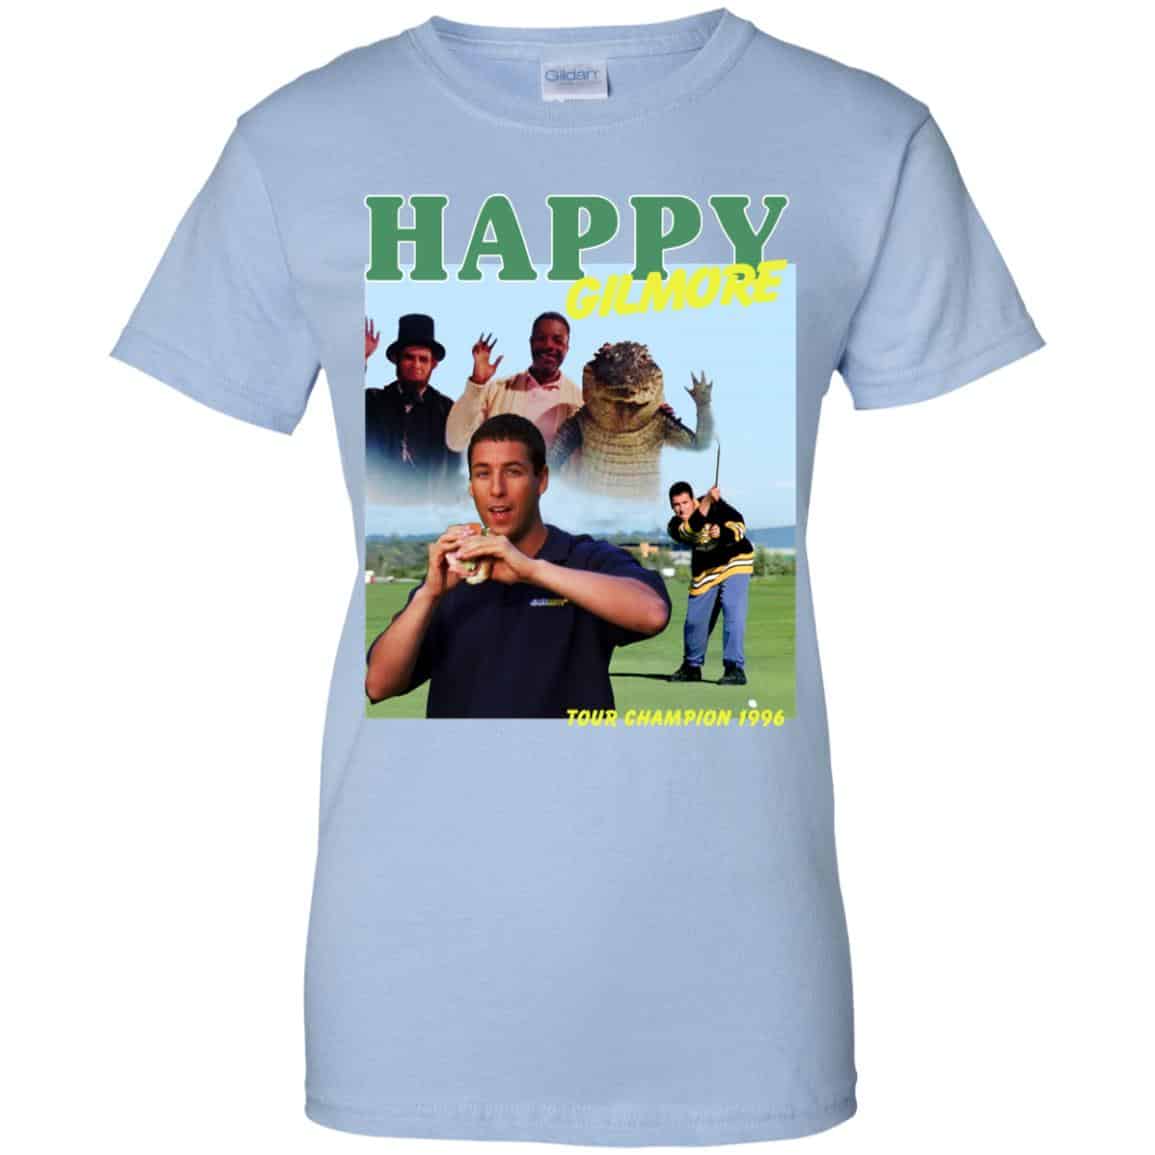 Happy Gilmore: Subway – T-Shirts On Screen